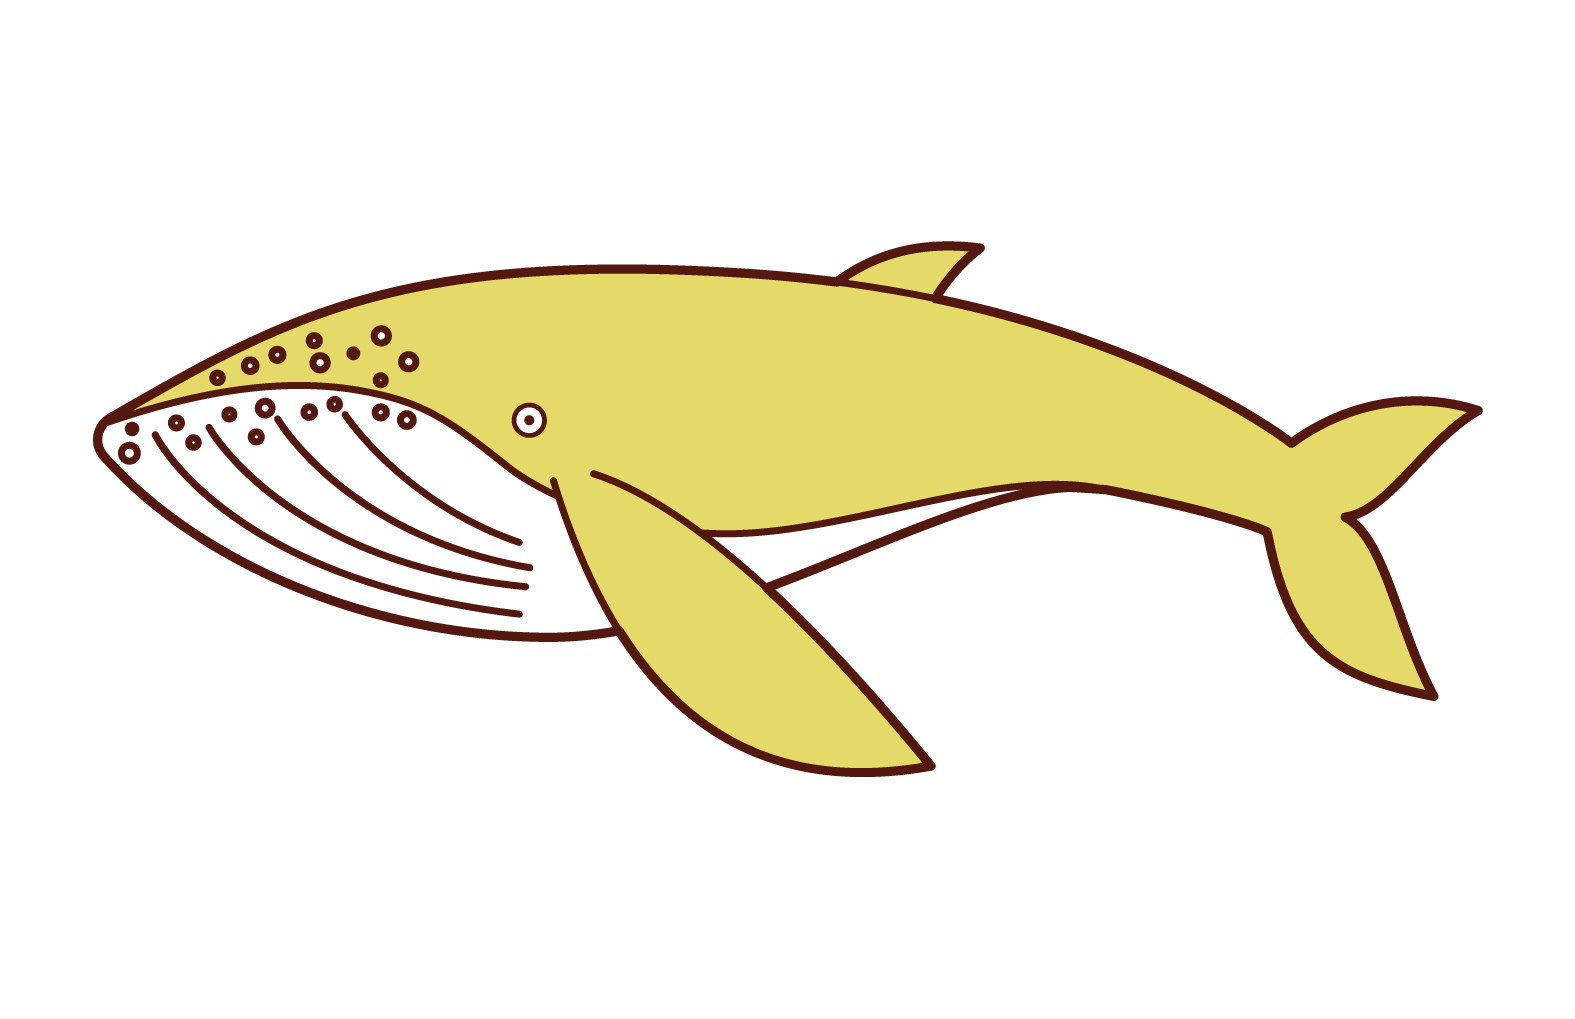 Illustration of humpback whale